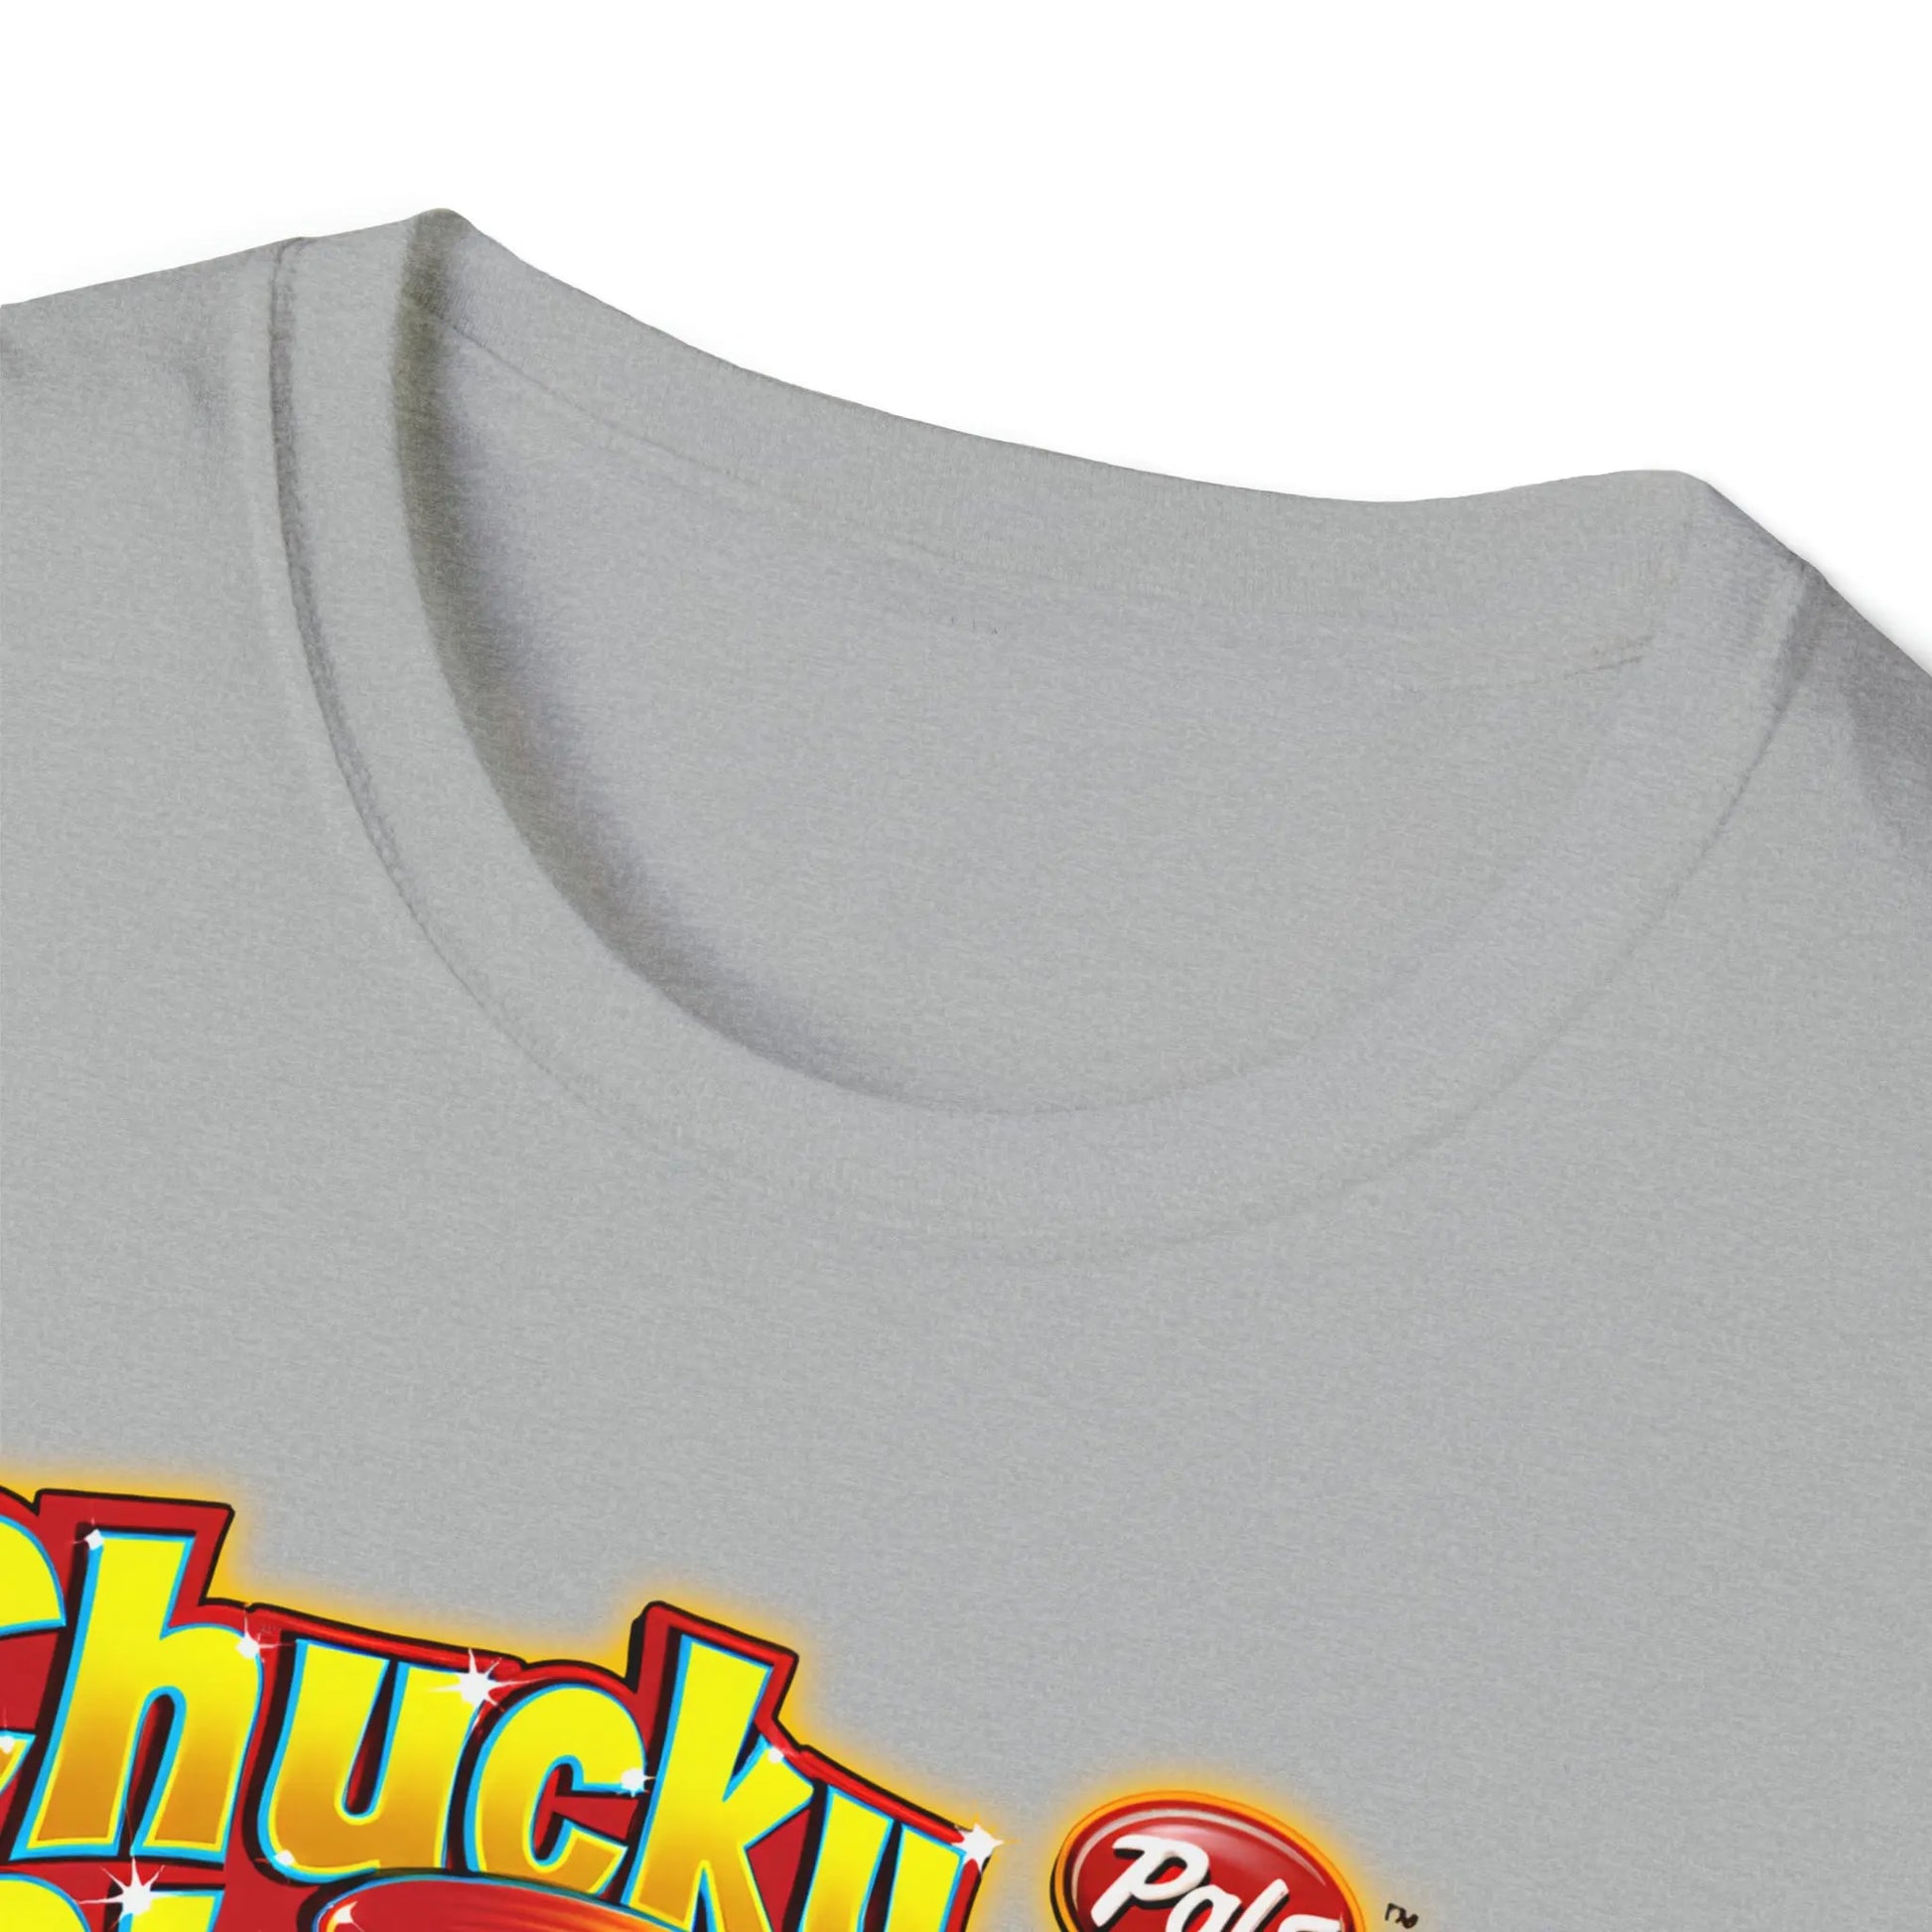 Chucky Charms' Child's Play Retro T-Shirt Halloween 2023 - papercraneco